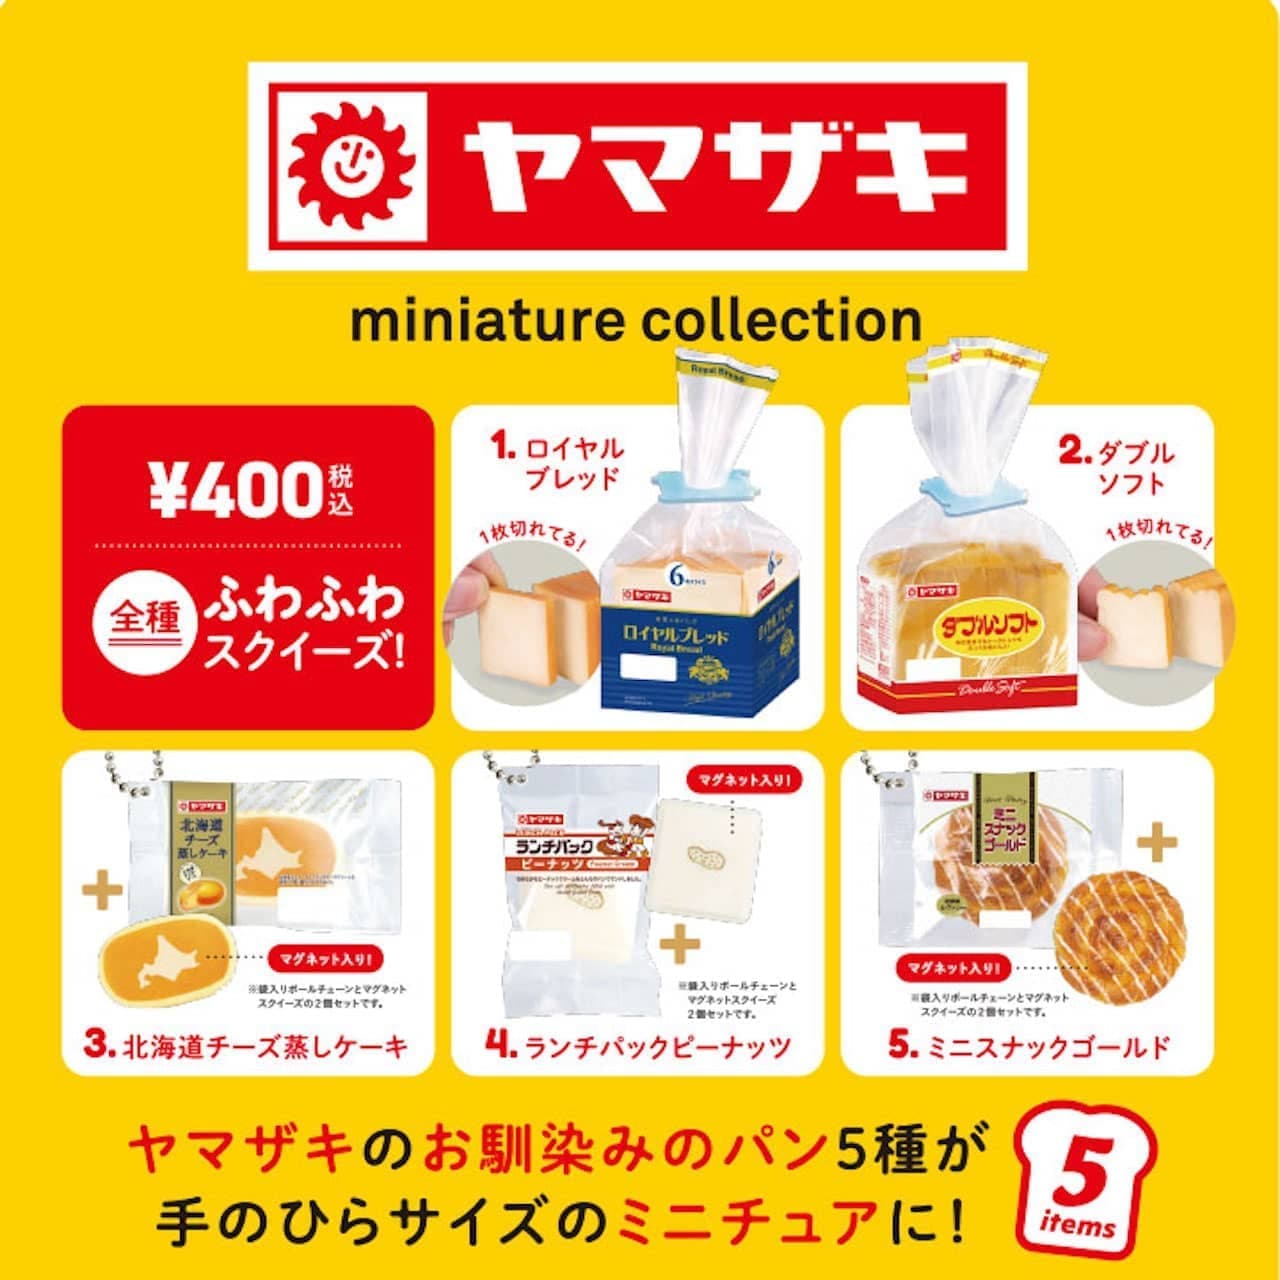 "Yamazaki Bread Miniature Collection" from Ken Elephant